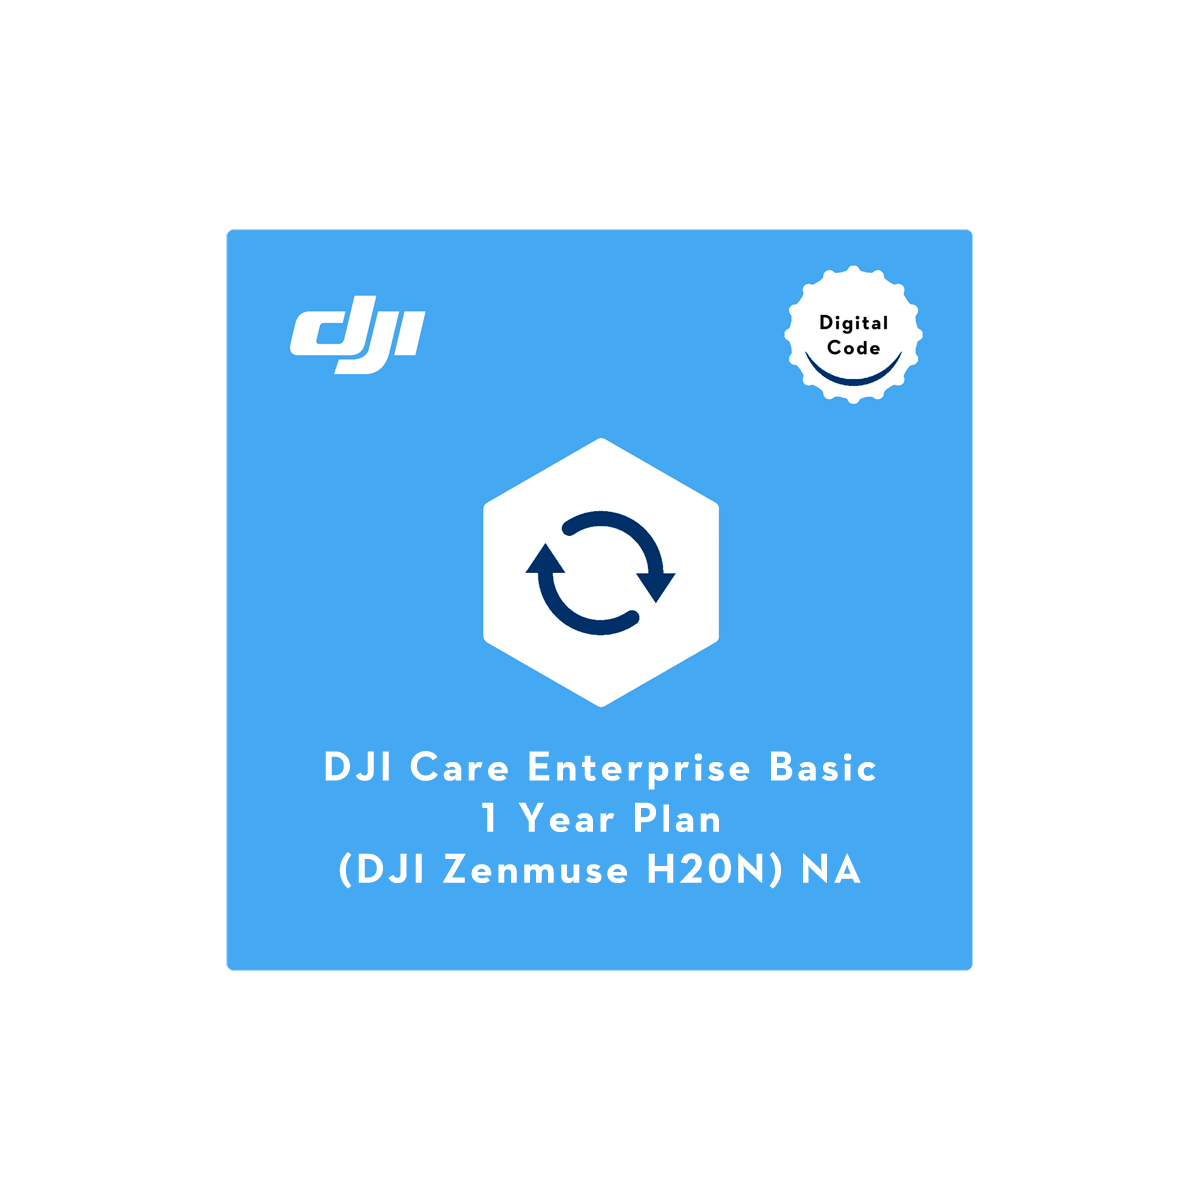 DJI Care Enterprise Basic (H20N) NA